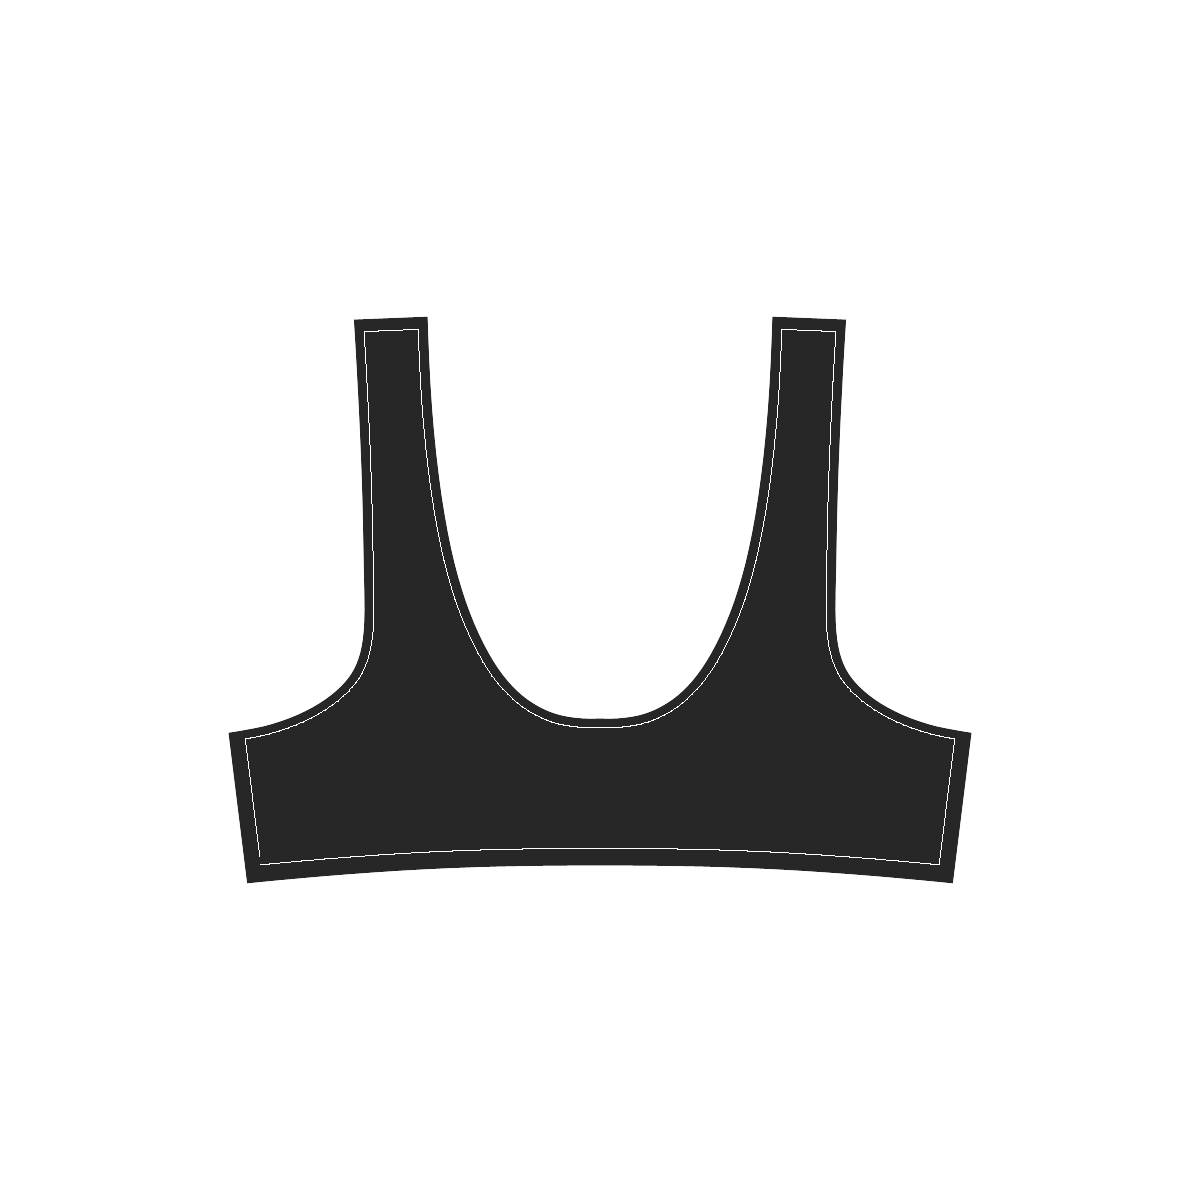 666letters Sport Top & High-Waisted Bikini Swimsuit (Model S07)